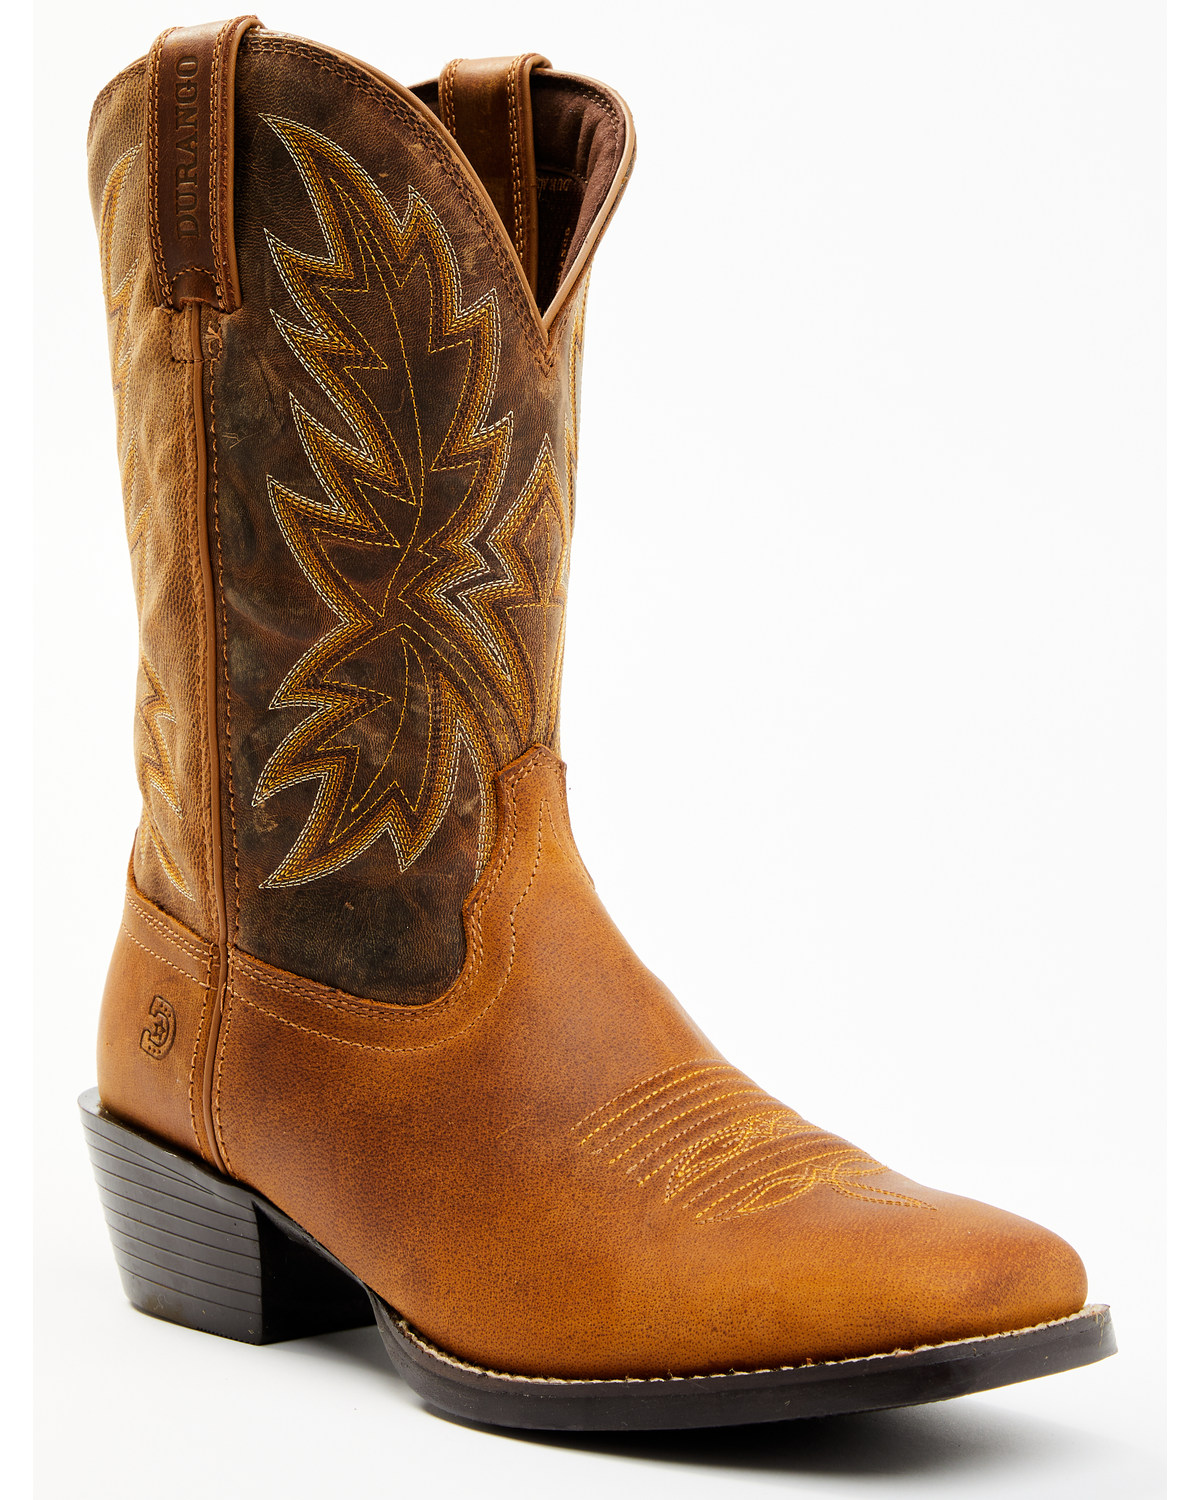 Durango Men's Westward Roughstock Western Boots - Broad Square Toe